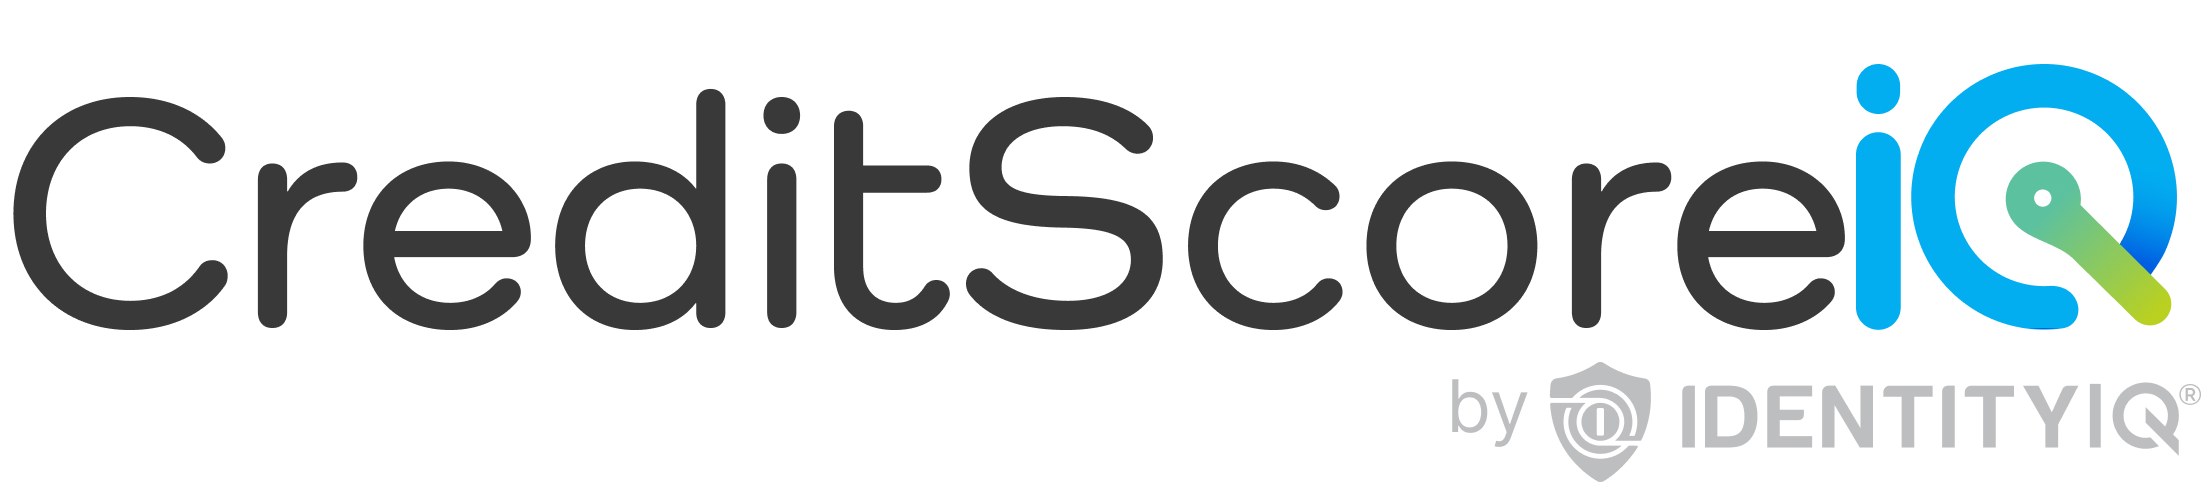 CreditScoreIQ by IdentityIQ logo